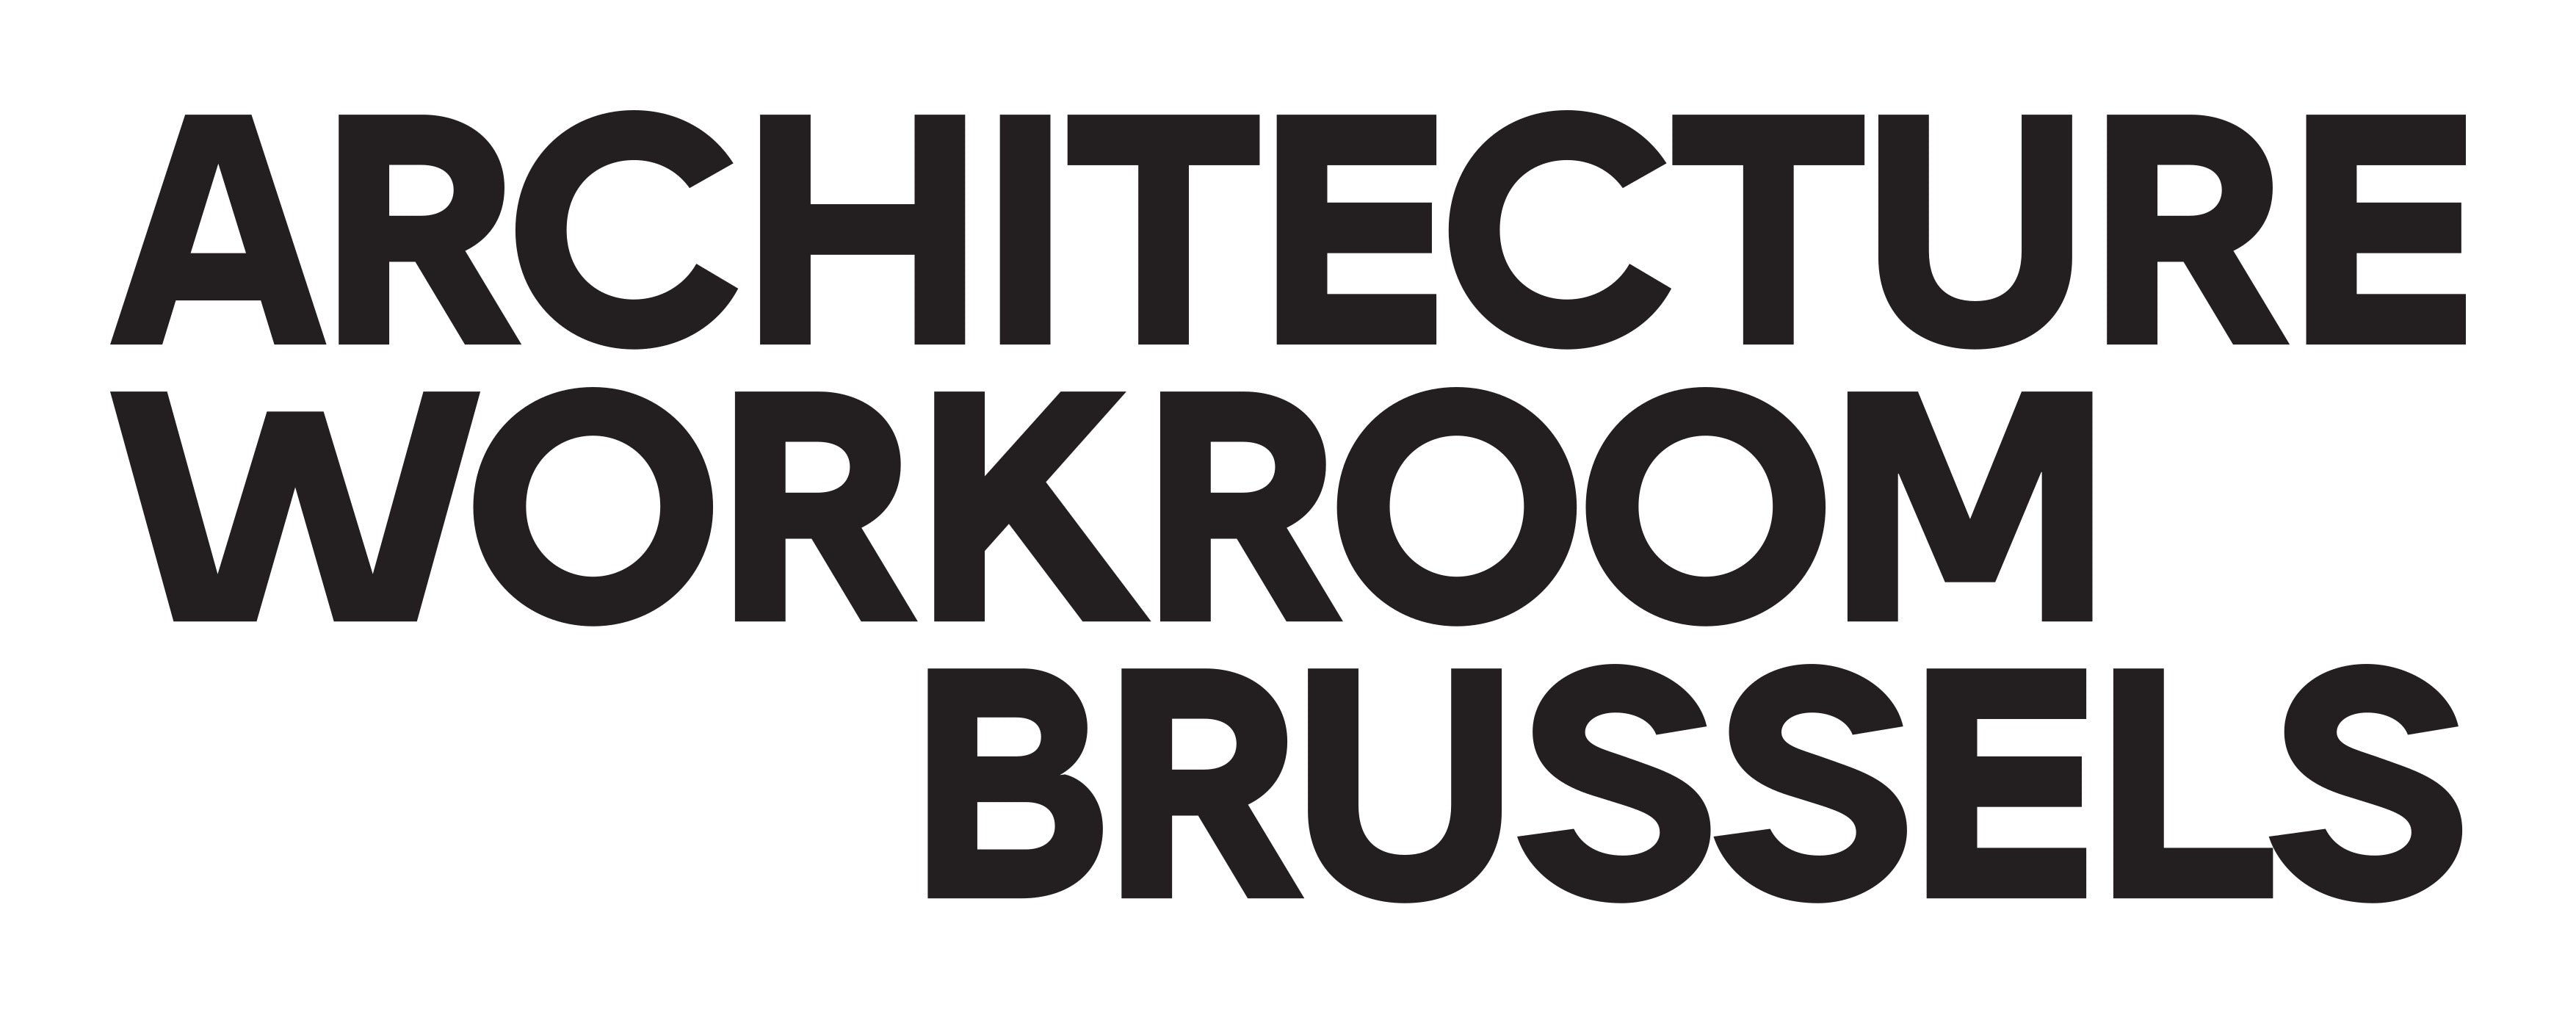 Architecture Workroom Brussels 